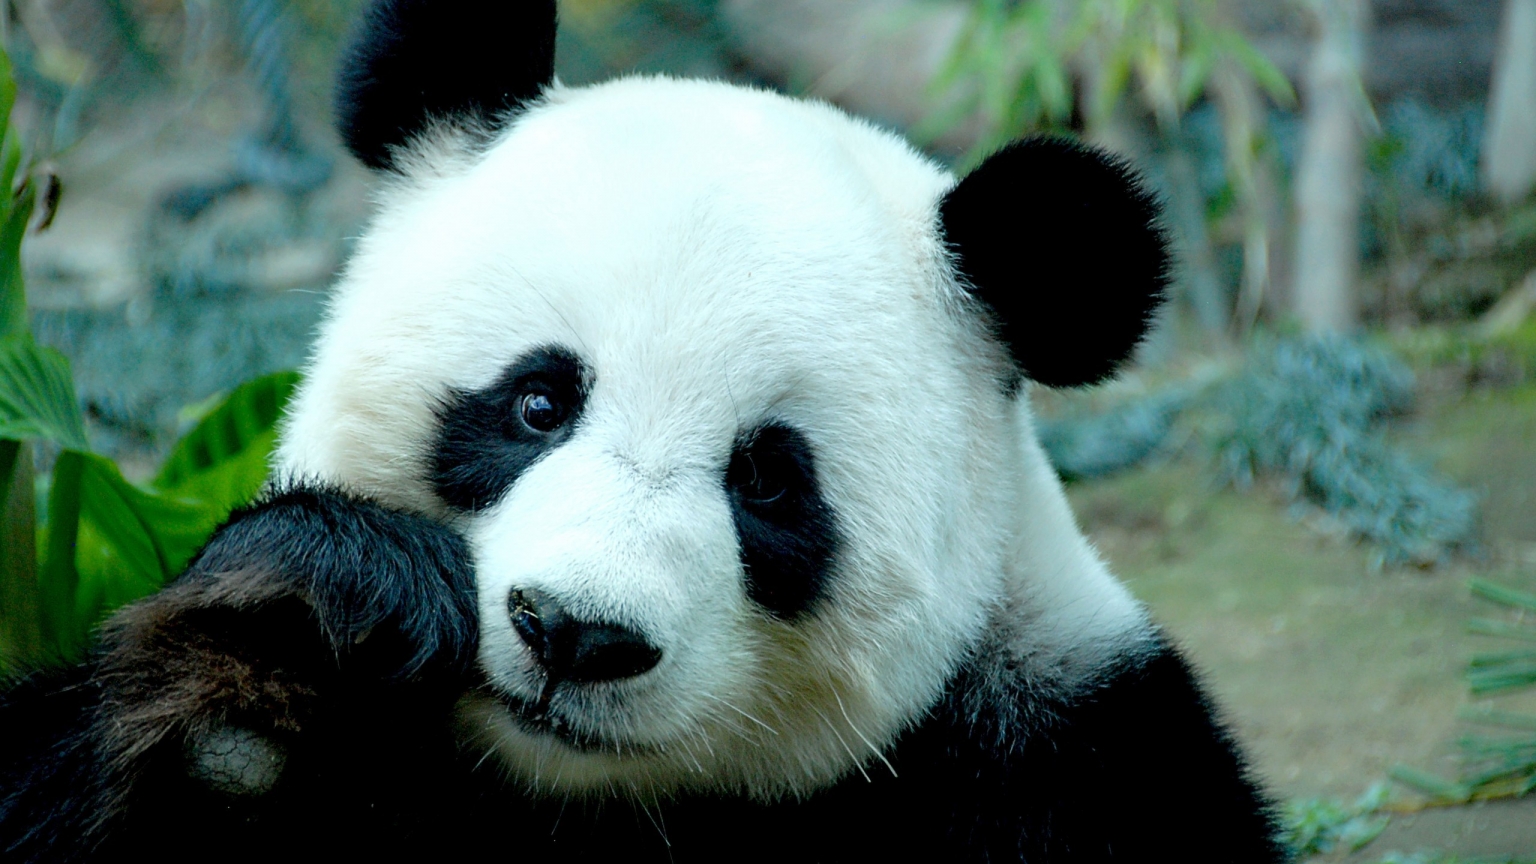 Sad Panda Bear for 1536 x 864 HDTV resolution